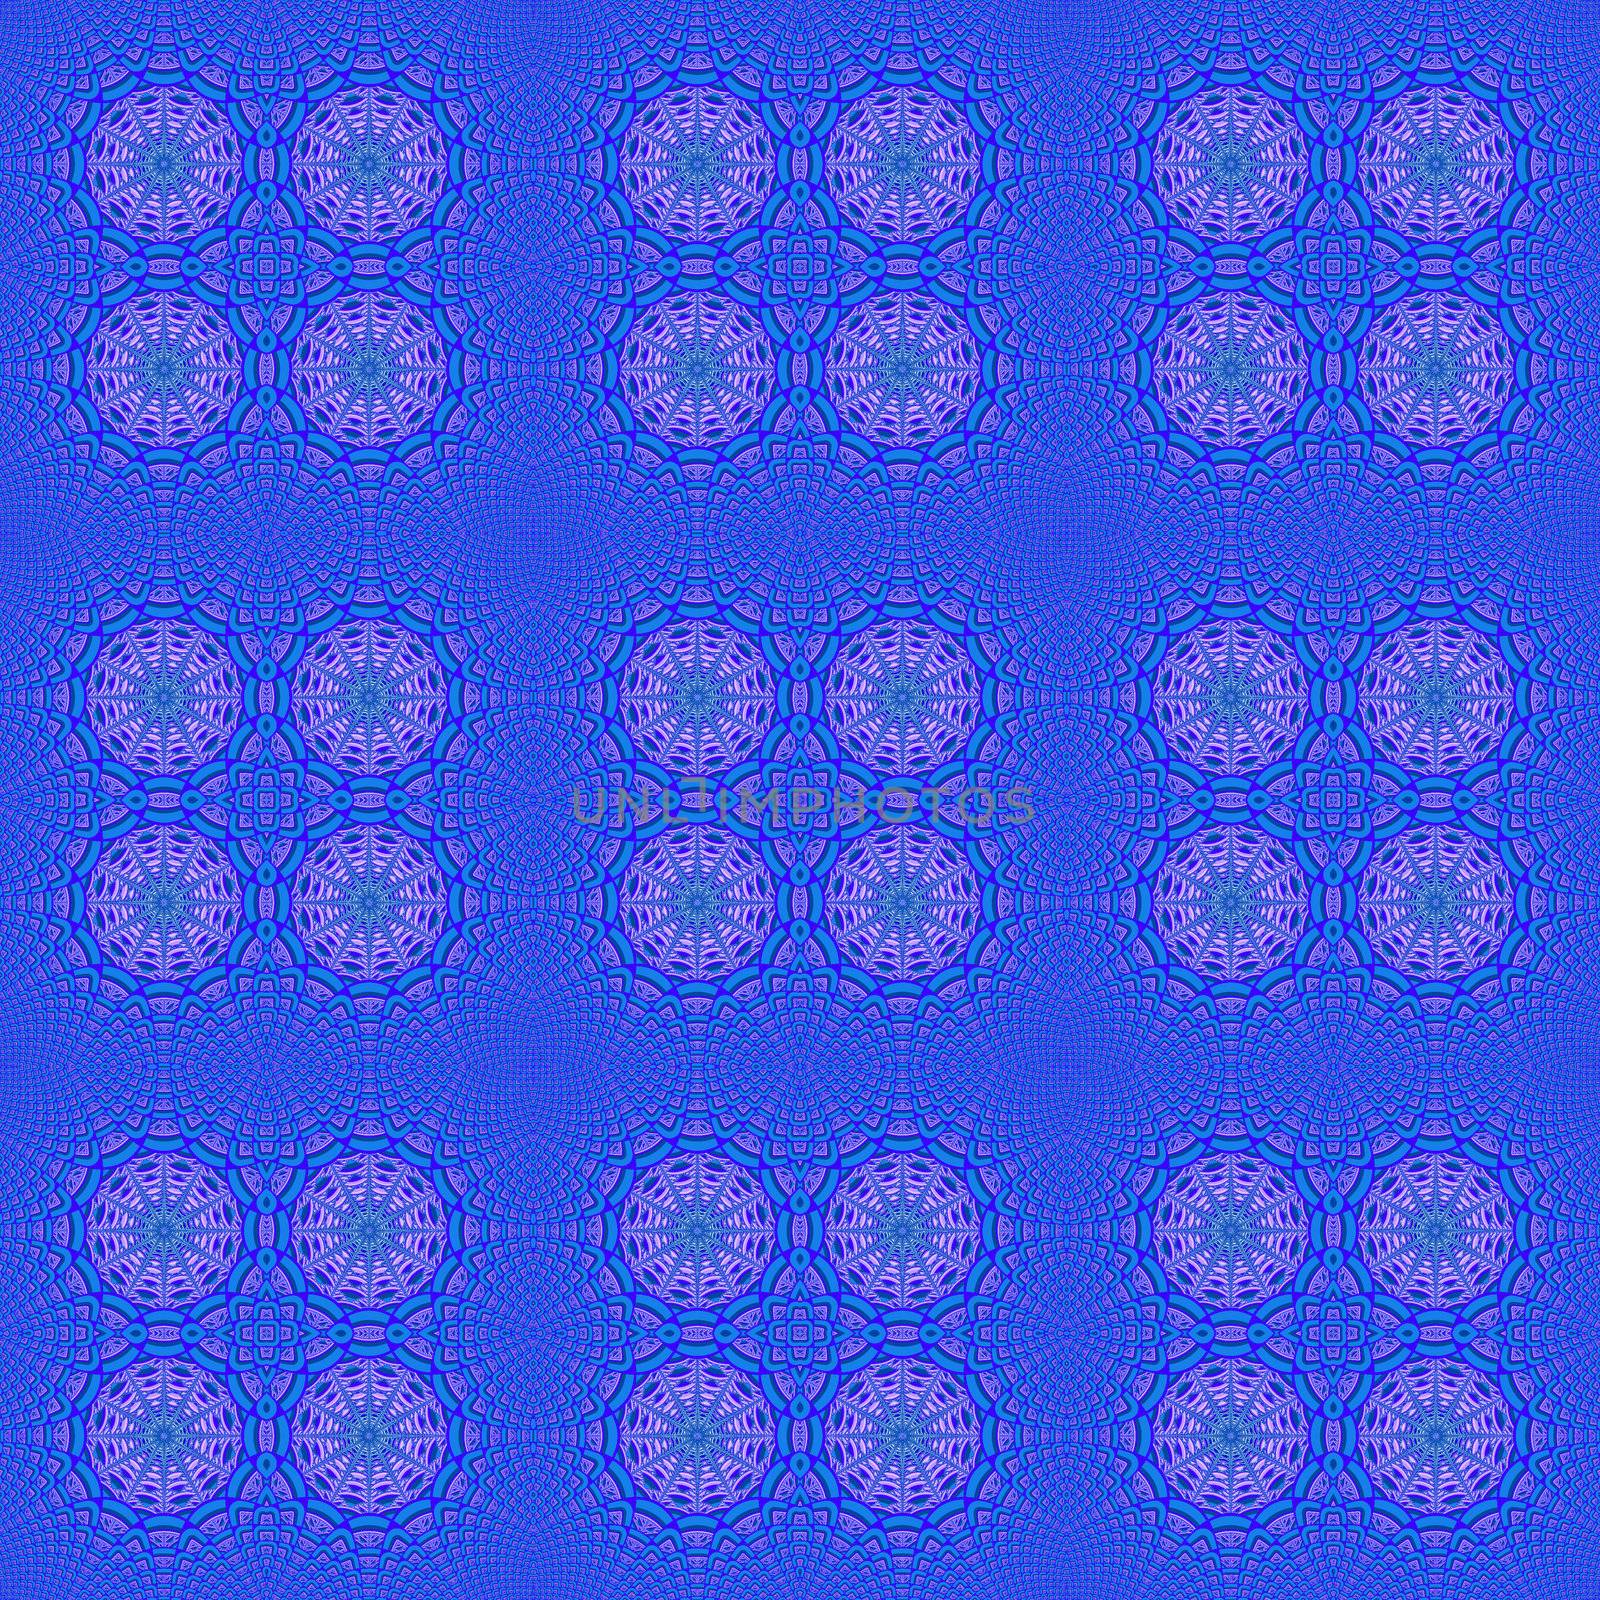 Pattern wallpaper. Digital generated graphic fractal.